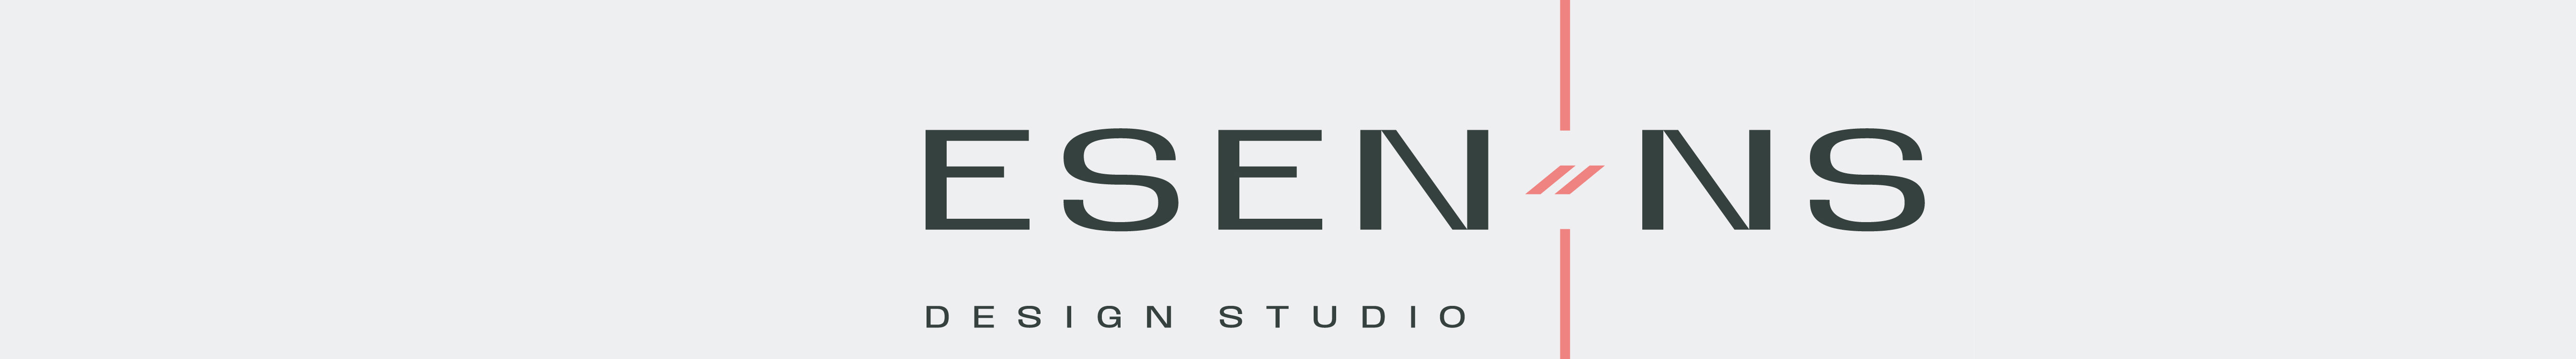 ESENINS design studio's profile banner